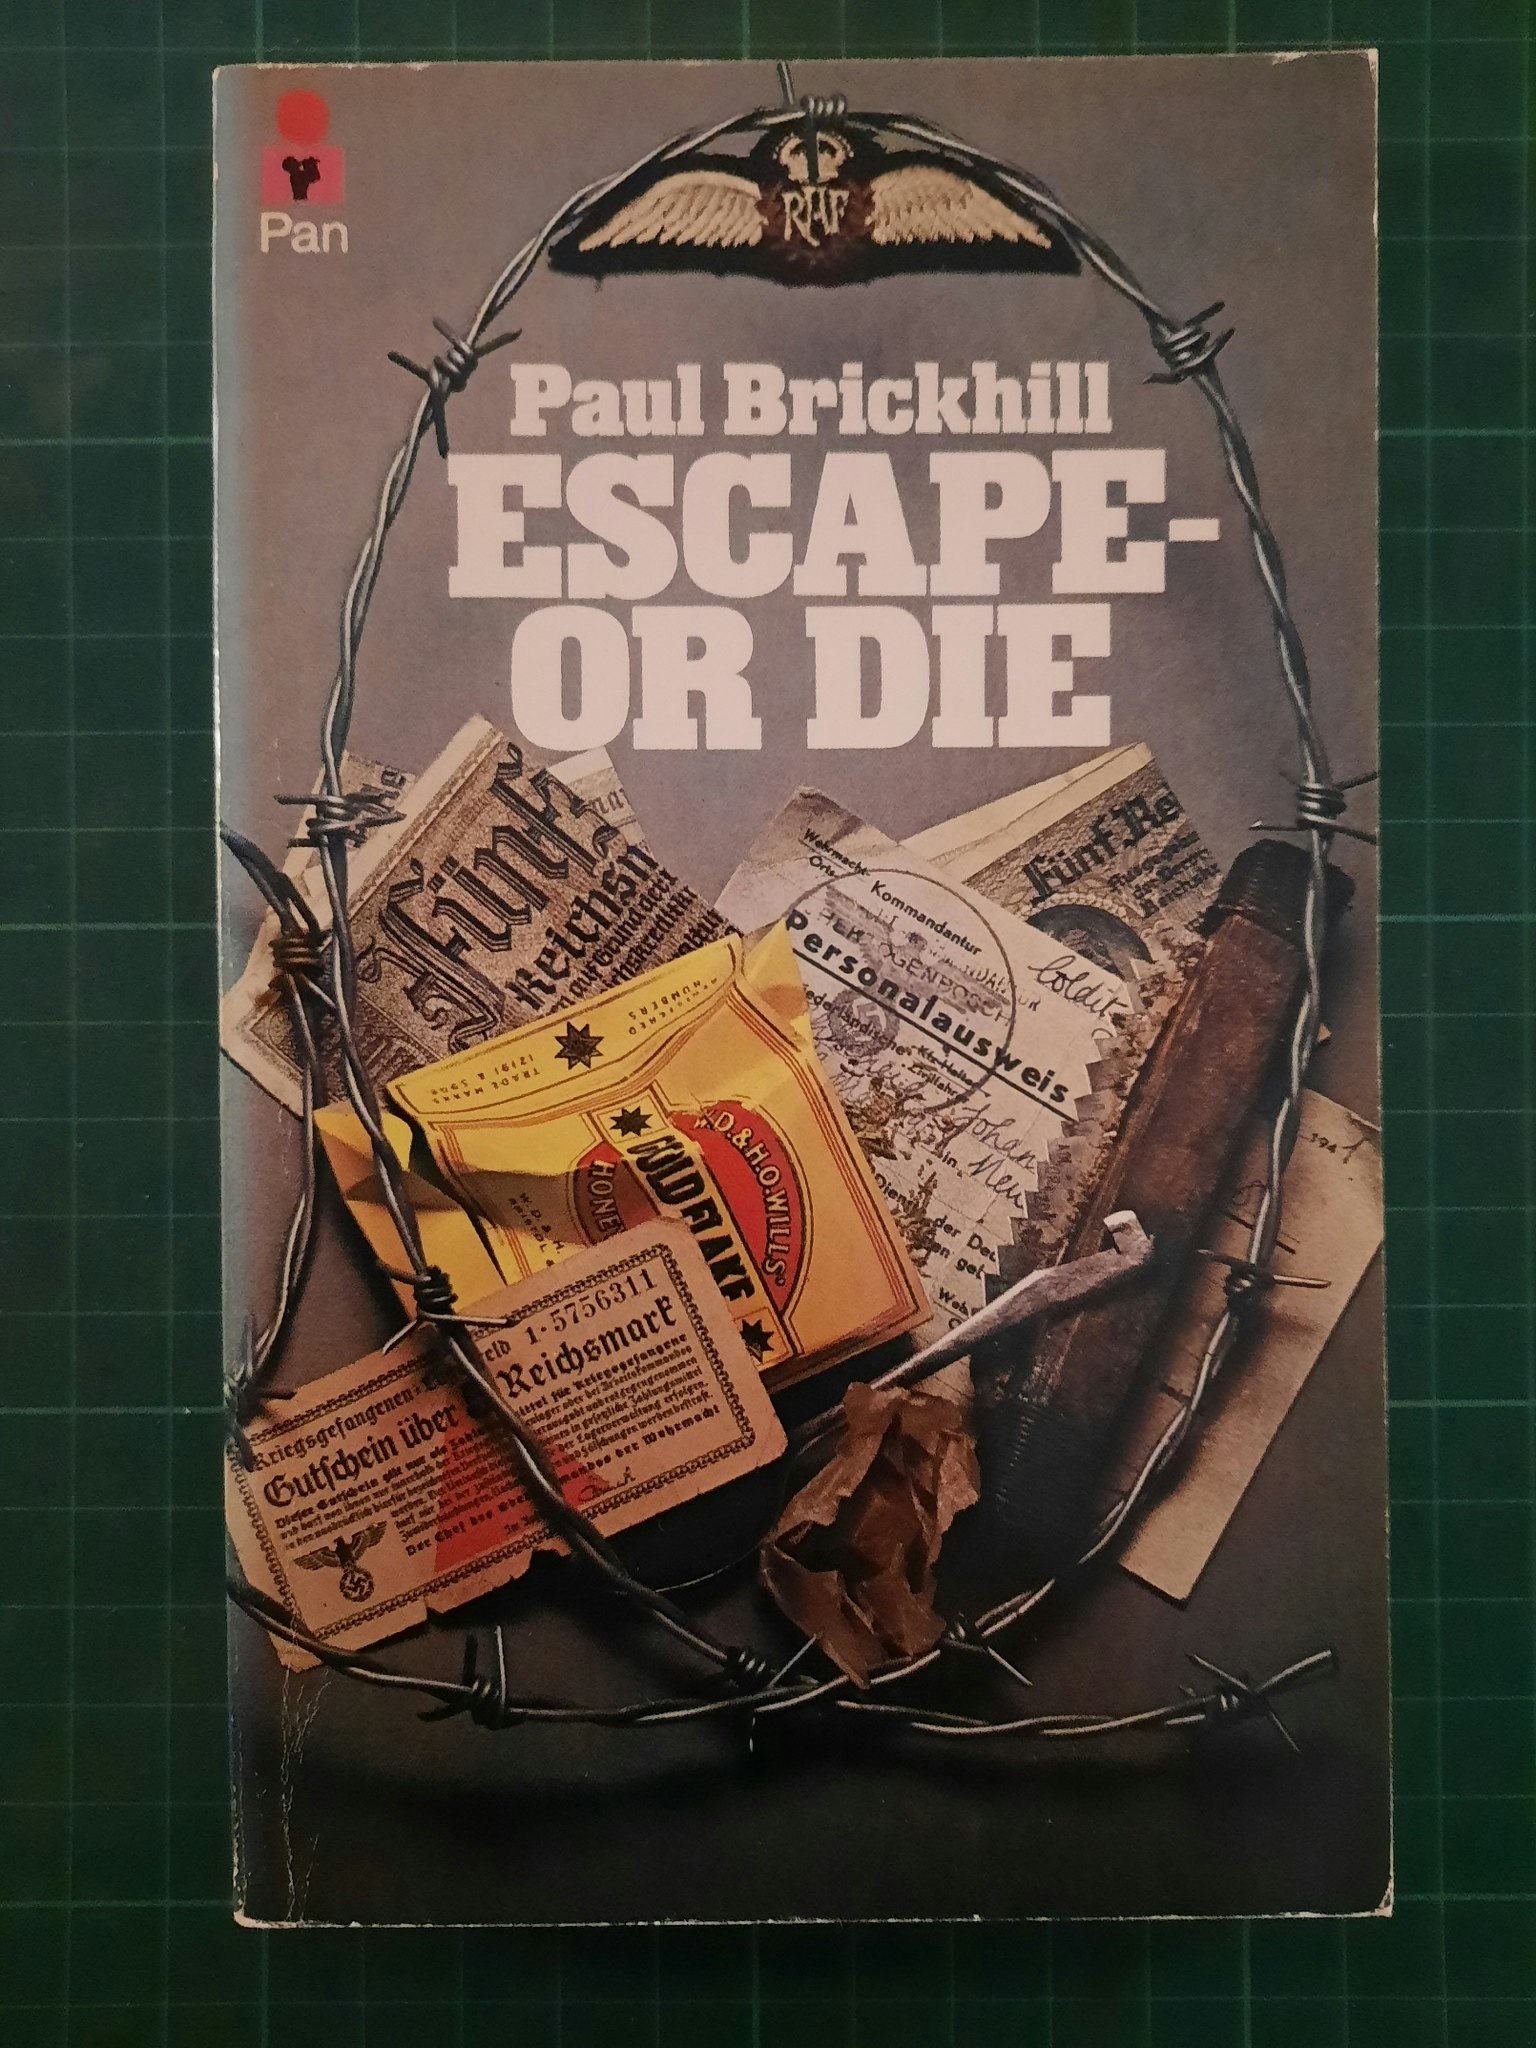 Paul Brickhill : Escape or die